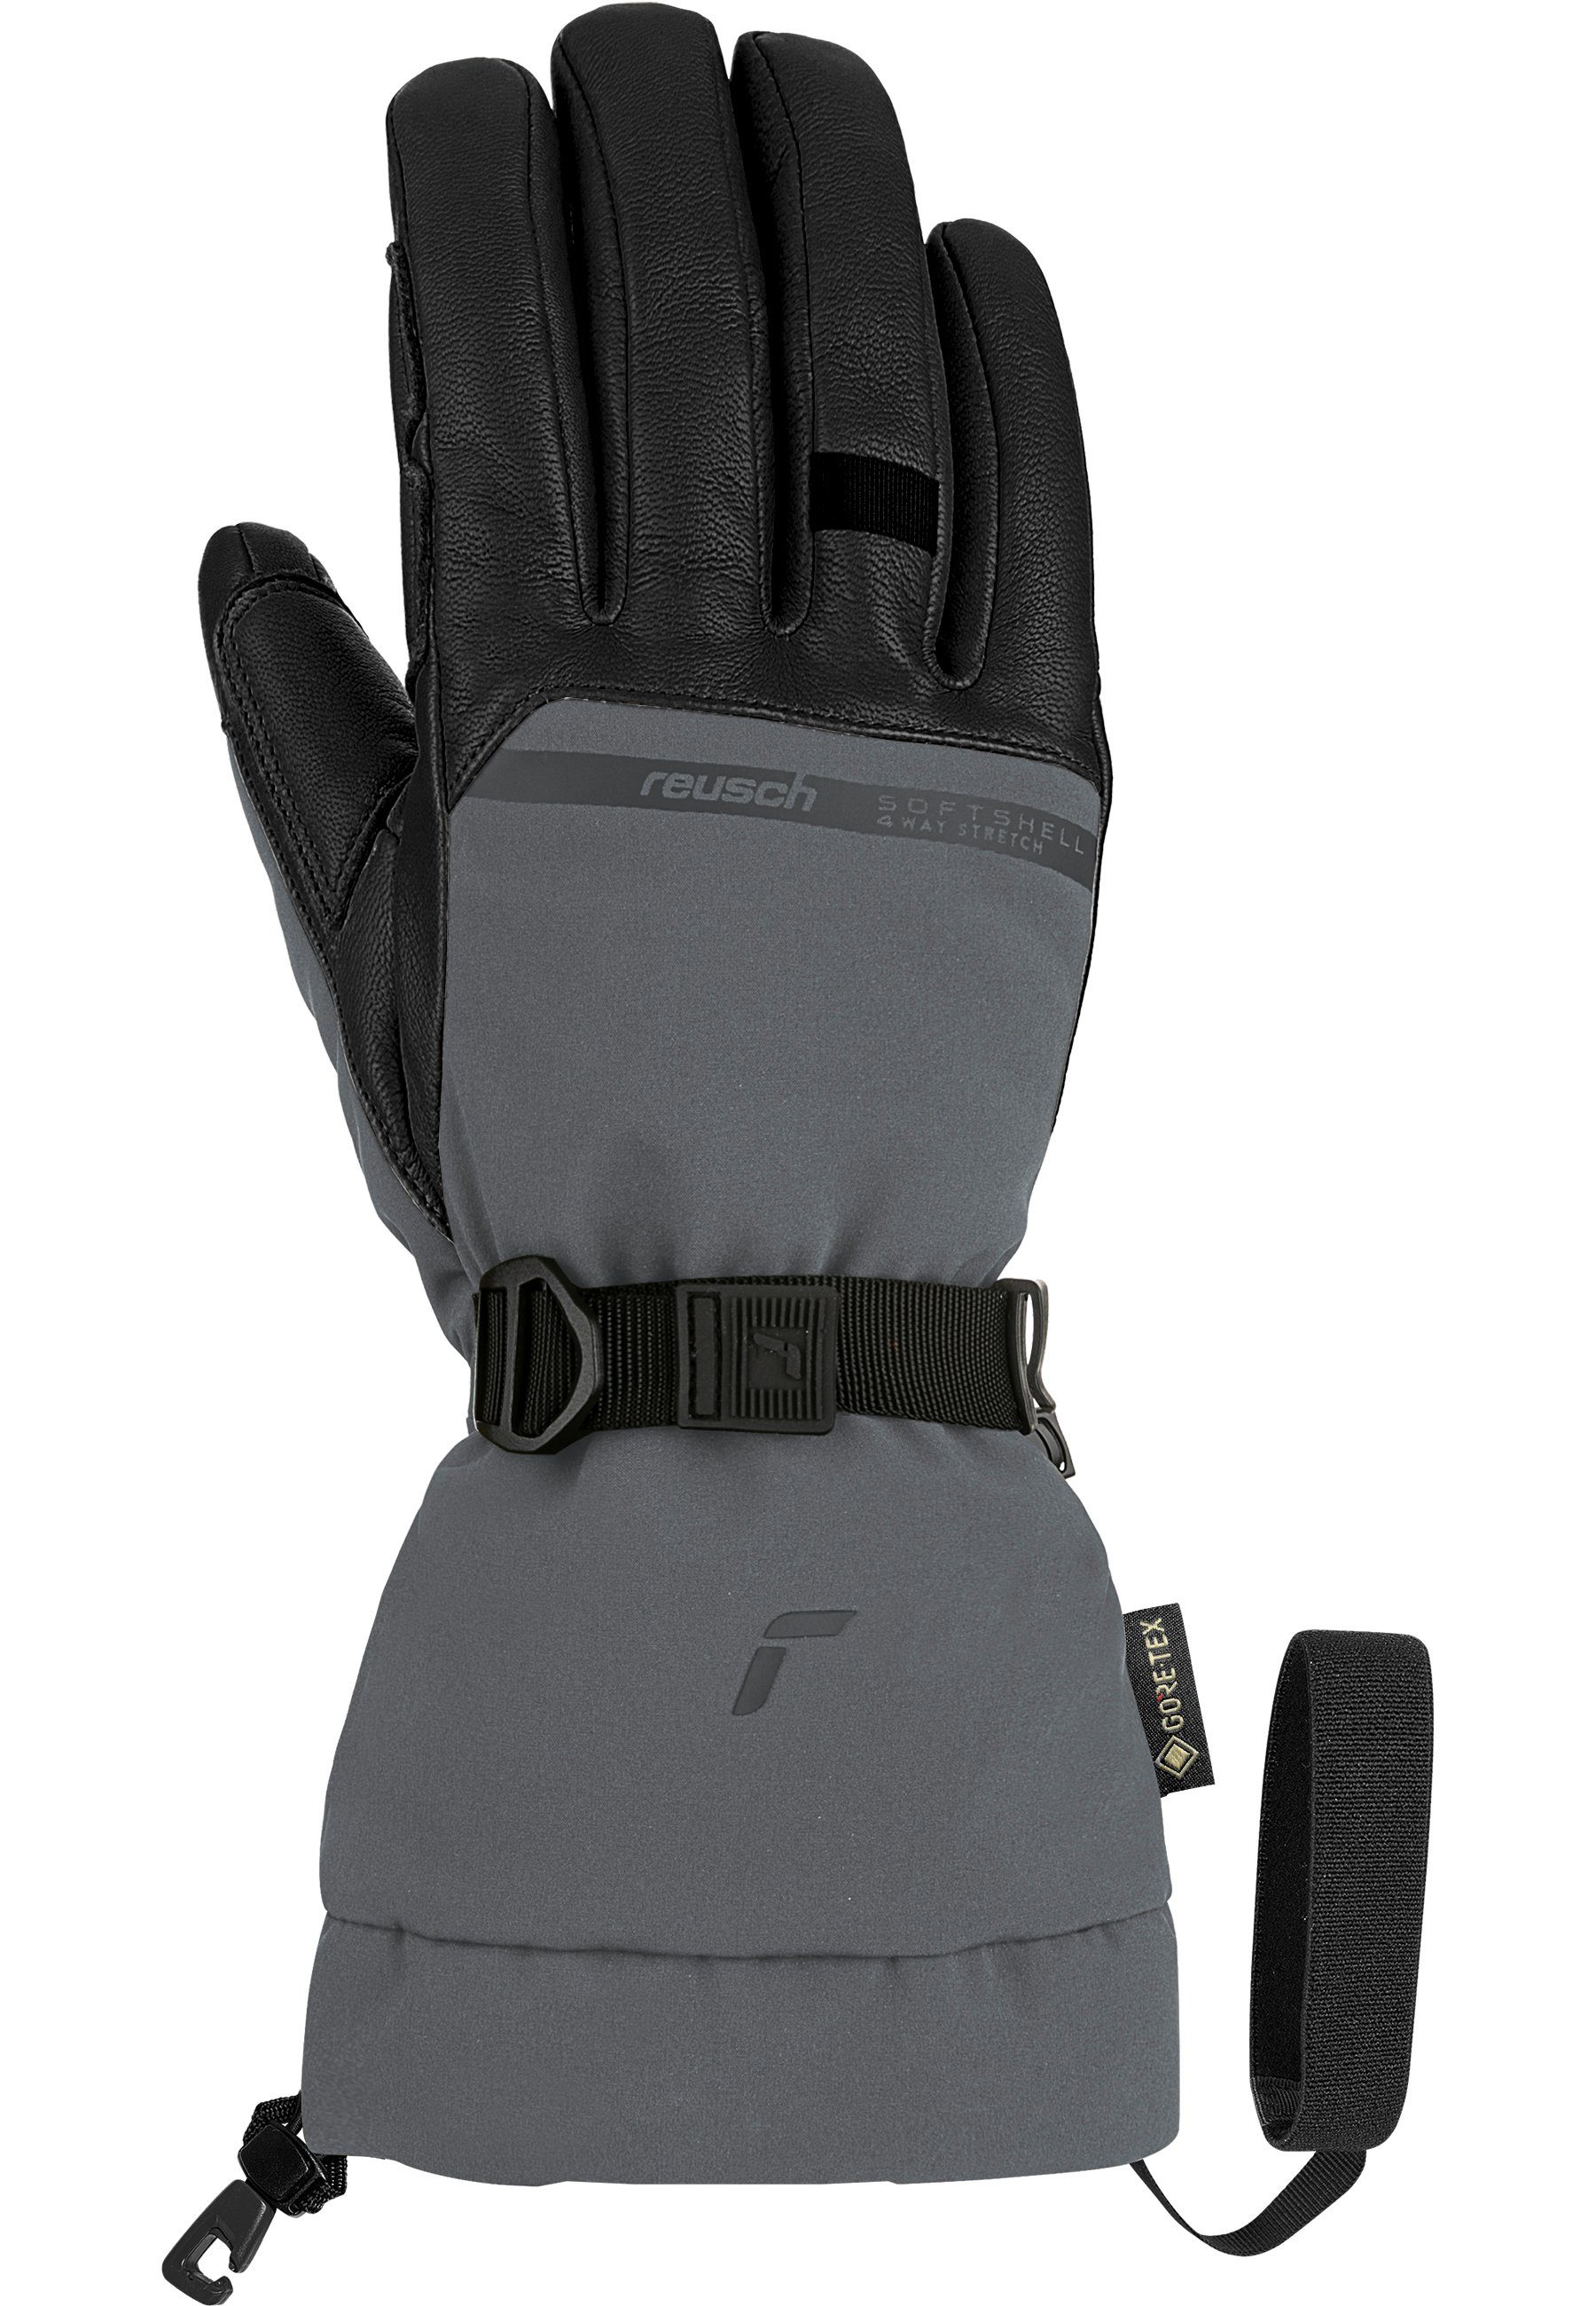 sehr TOUCH-TEC™ grau-schwarz Reusch Skihandschuhe GORE-TEX Discovery warm, wasserdicht